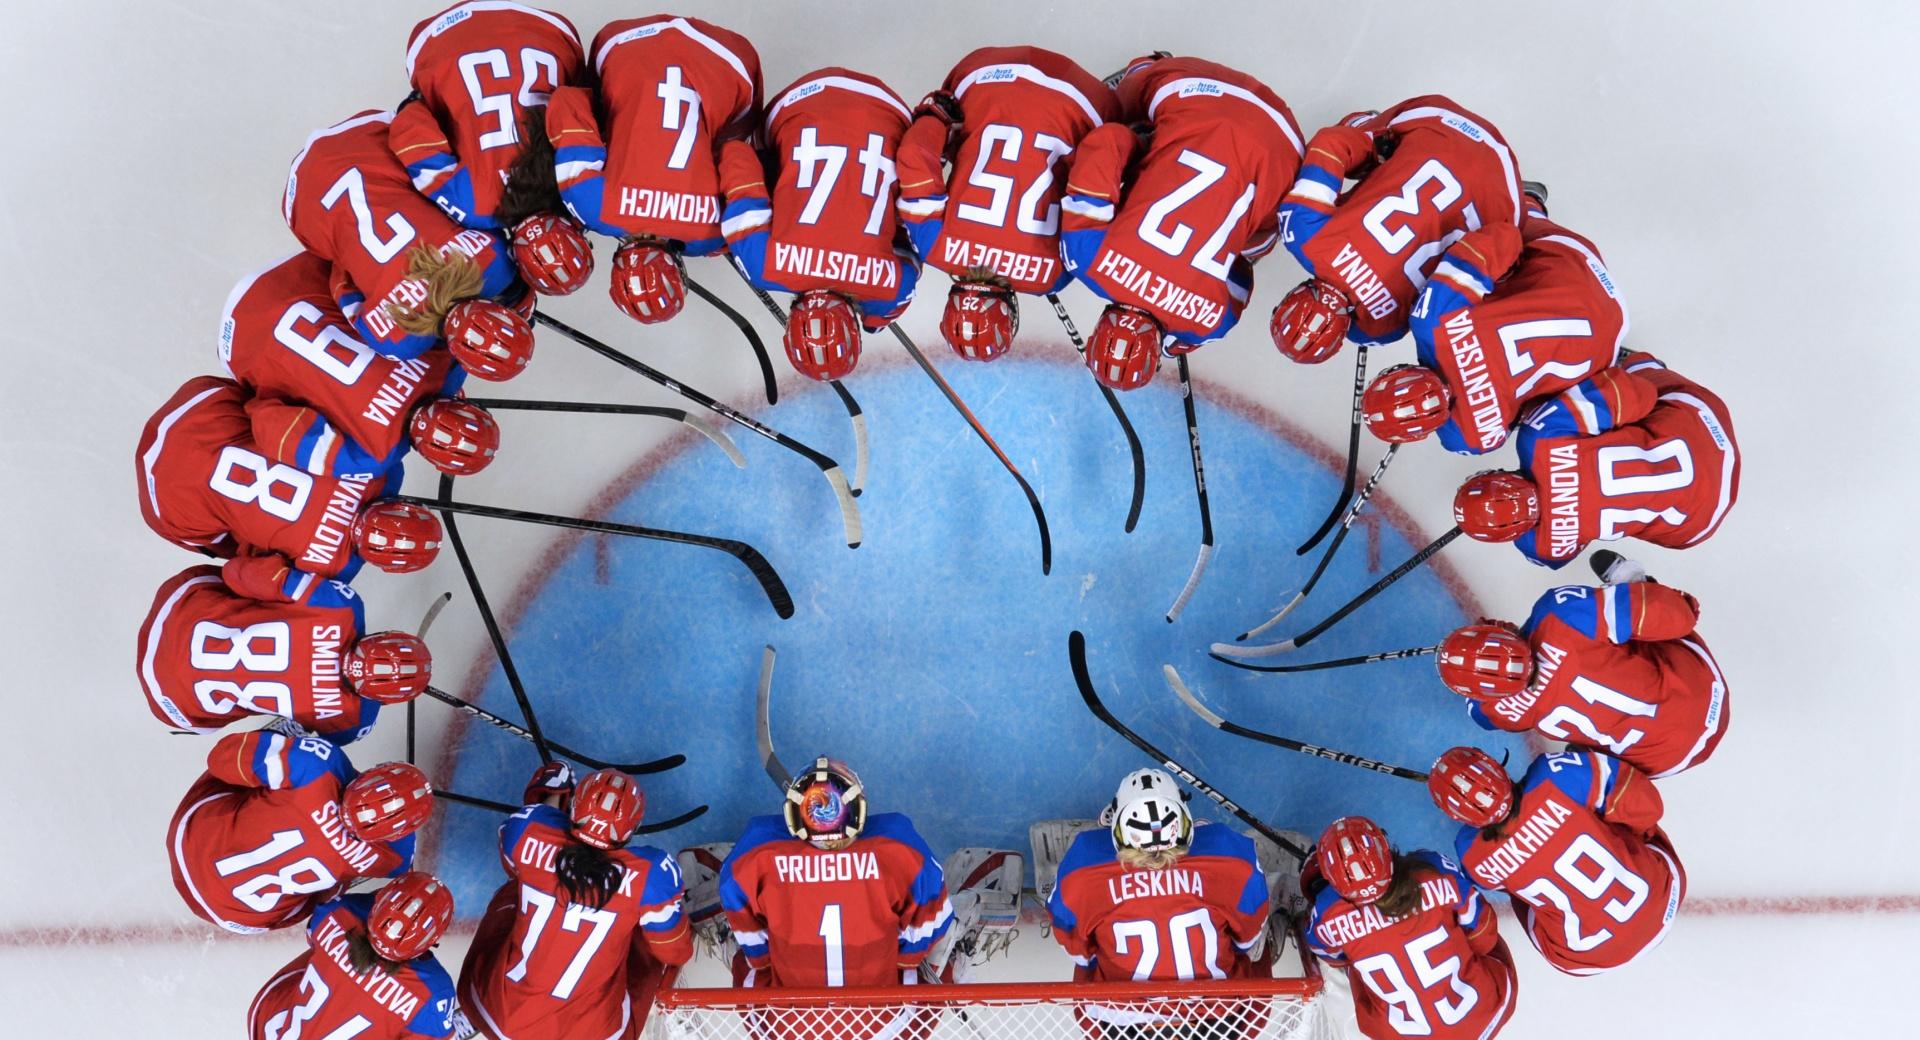 Sochi 2014 Hockey at 1024 x 1024 iPad size wallpapers HD quality